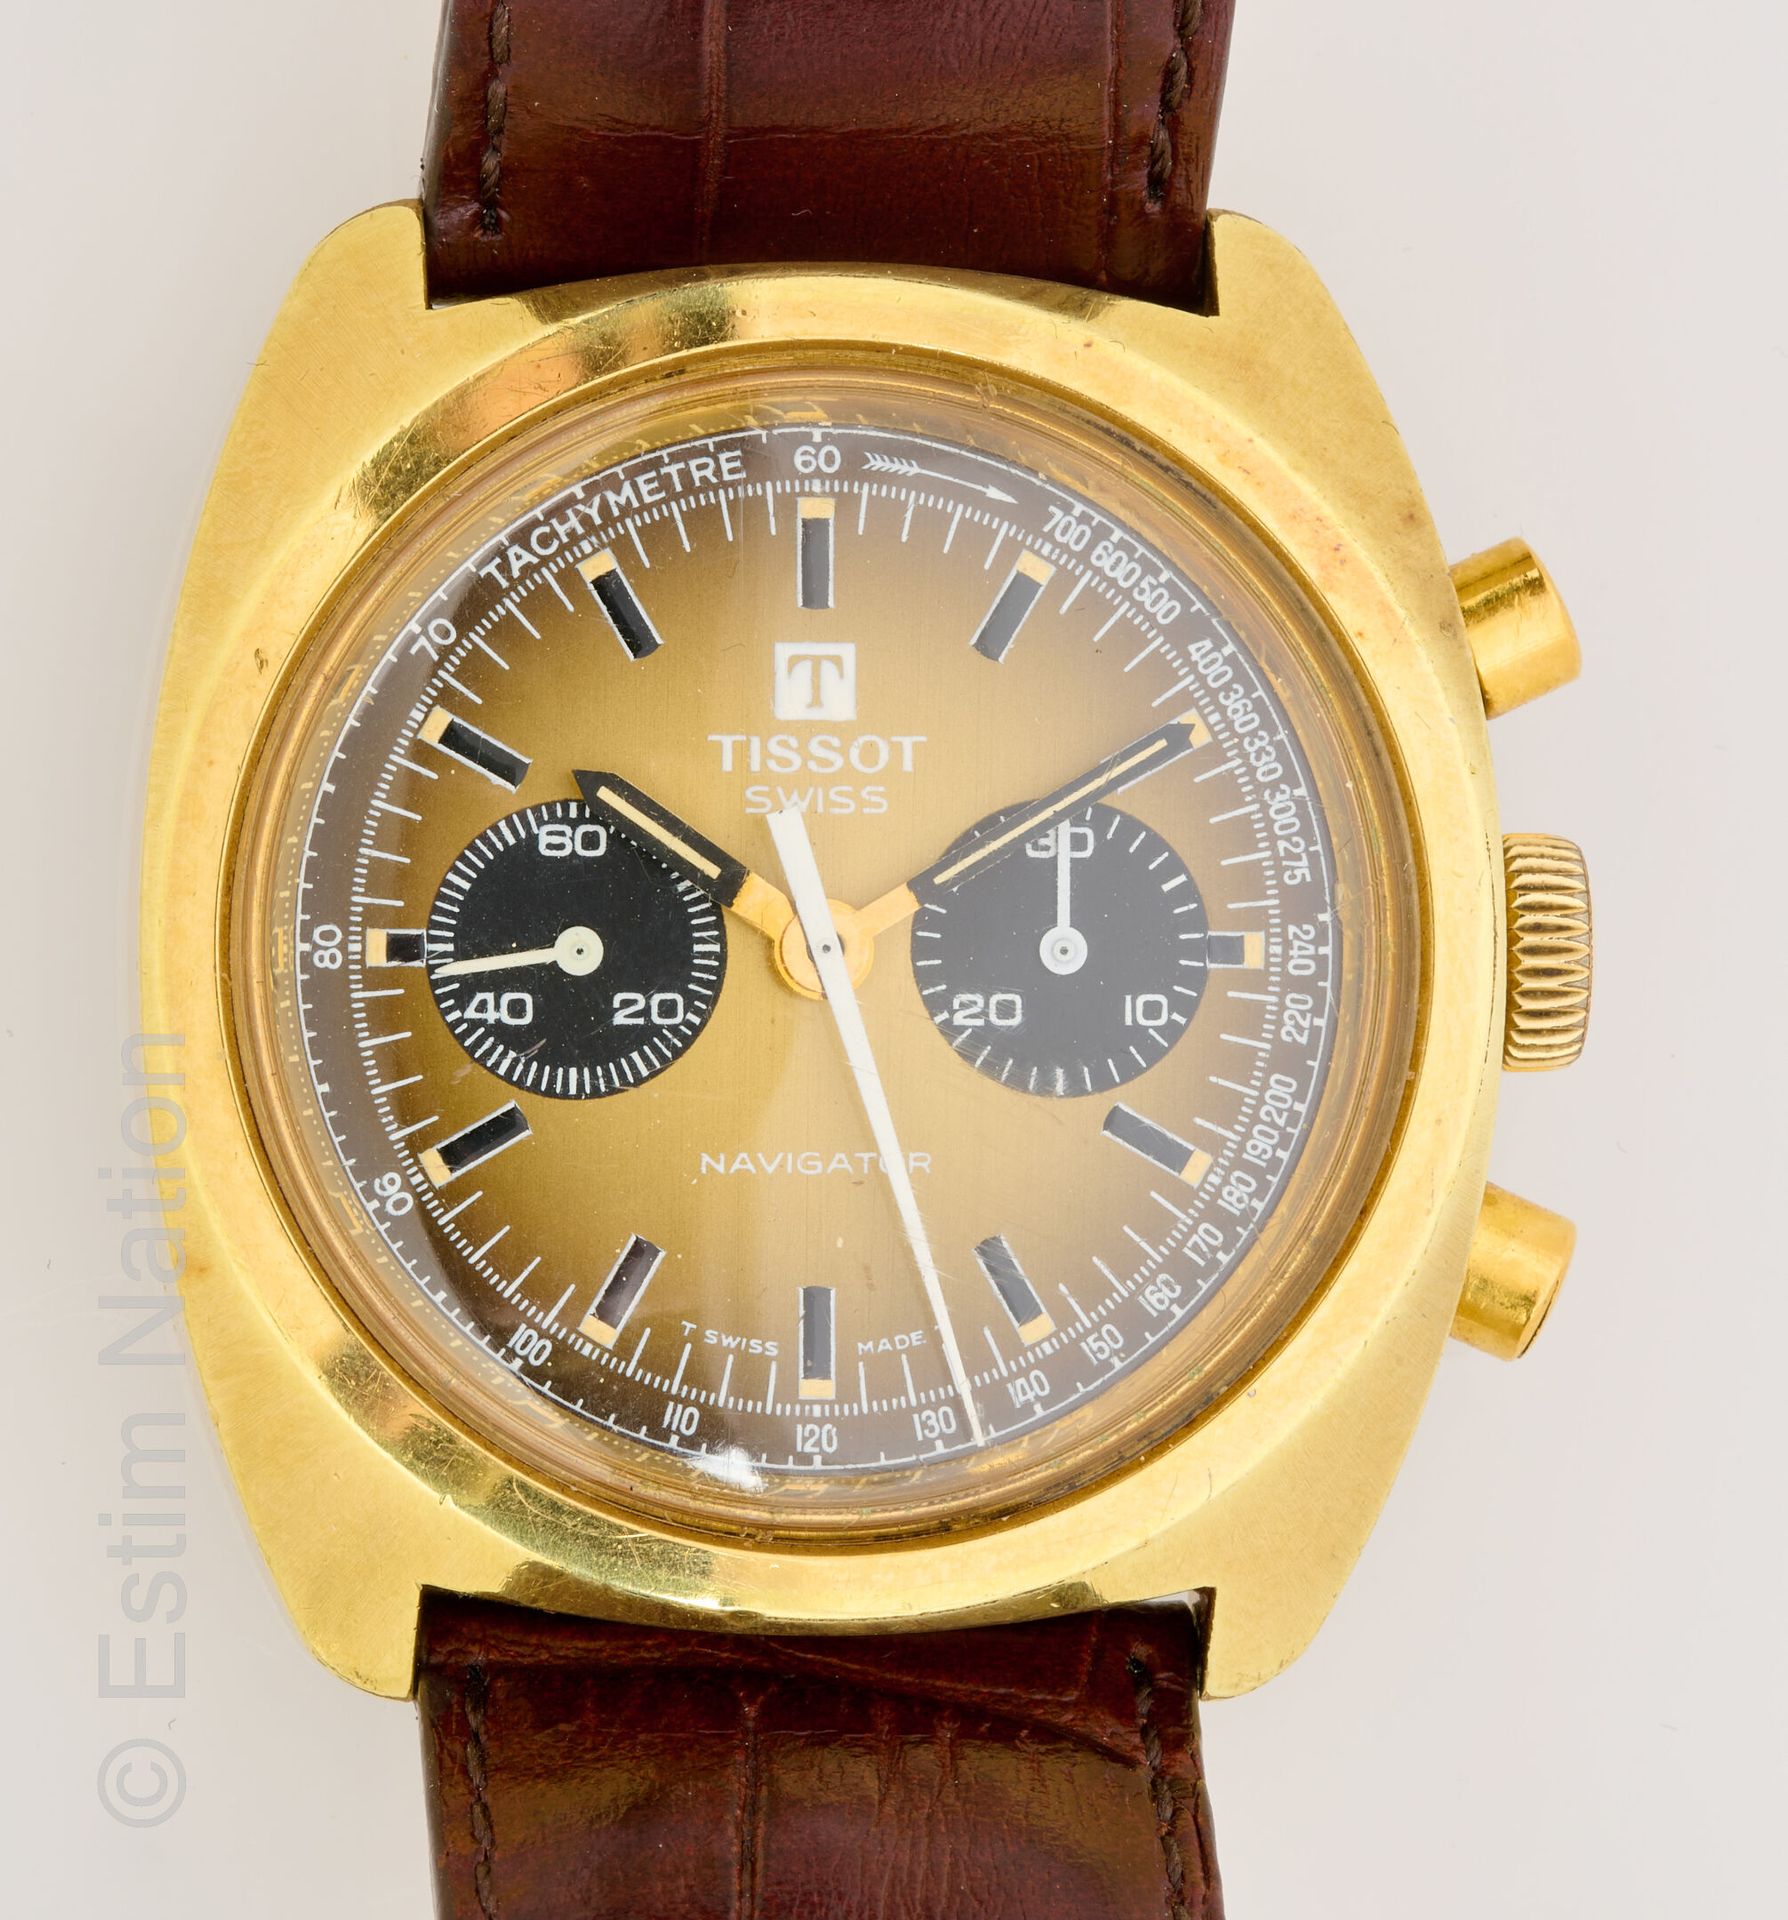 TISSOT - NAVIGATOR Tissot 
Navigator
Gold-plated chronograph watch with mechanic&hellip;